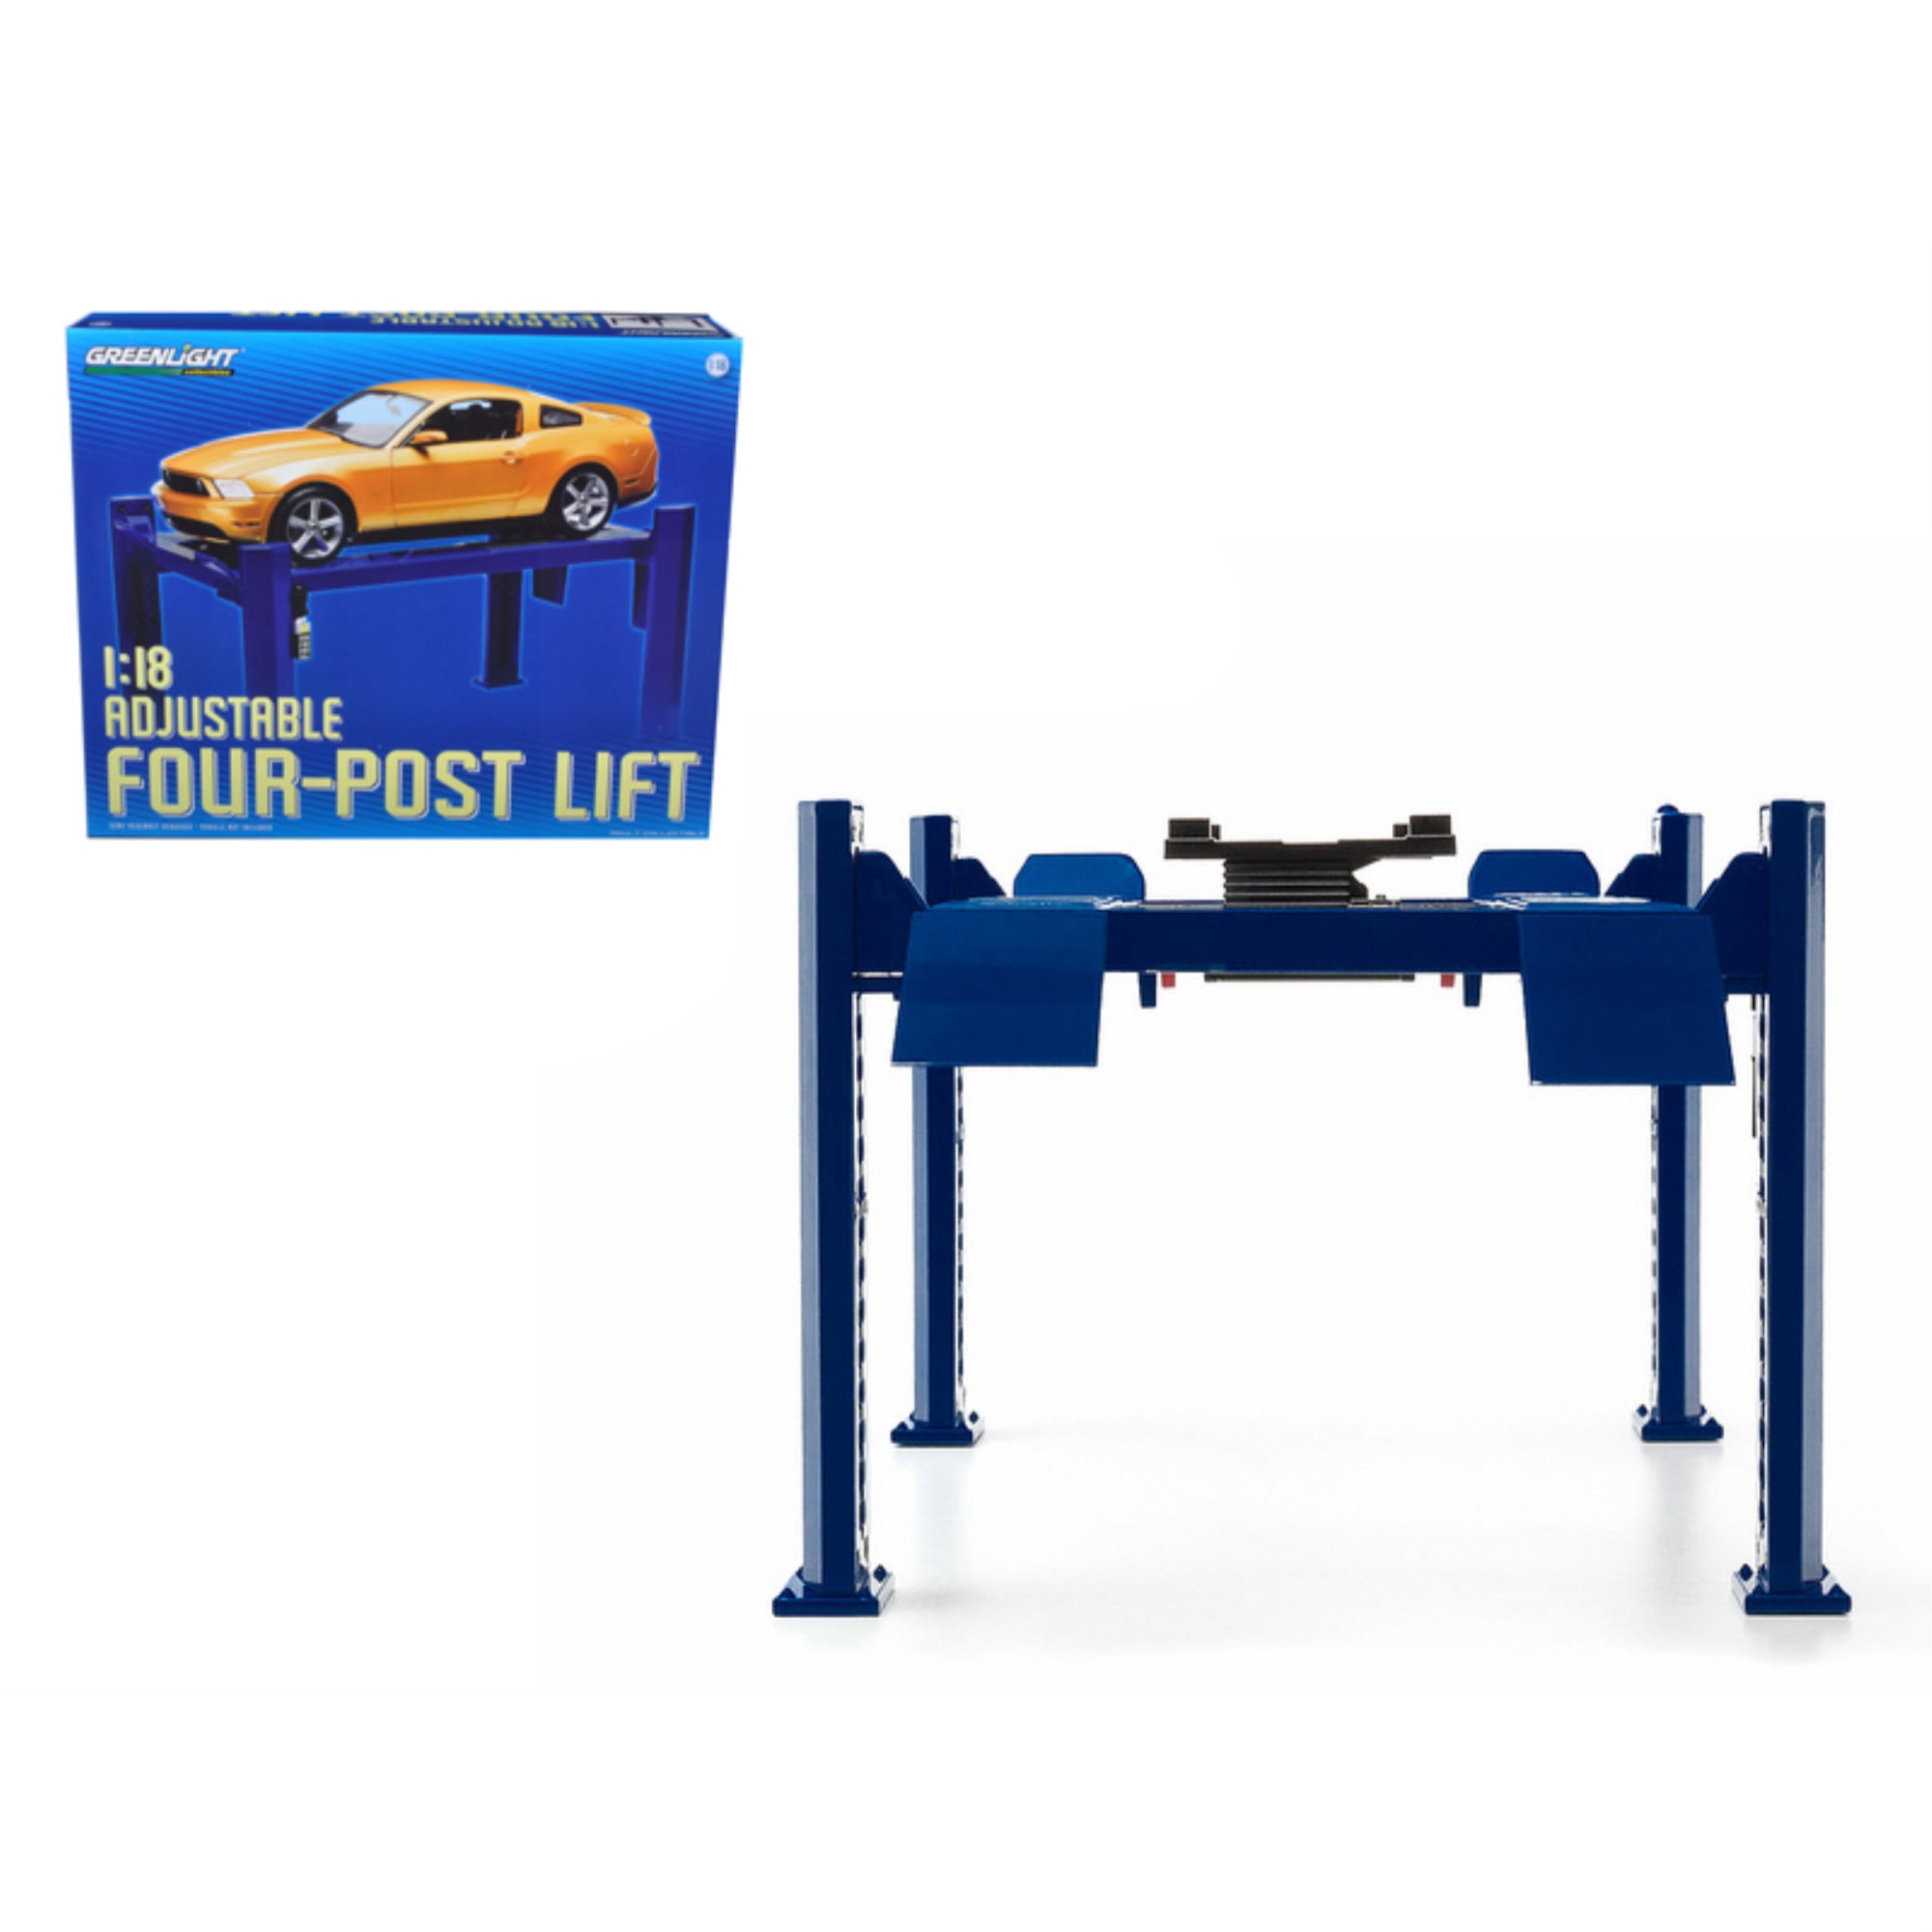 Four Lift Blue 1/18 Scale Diecast Model Cars by Walmart.com